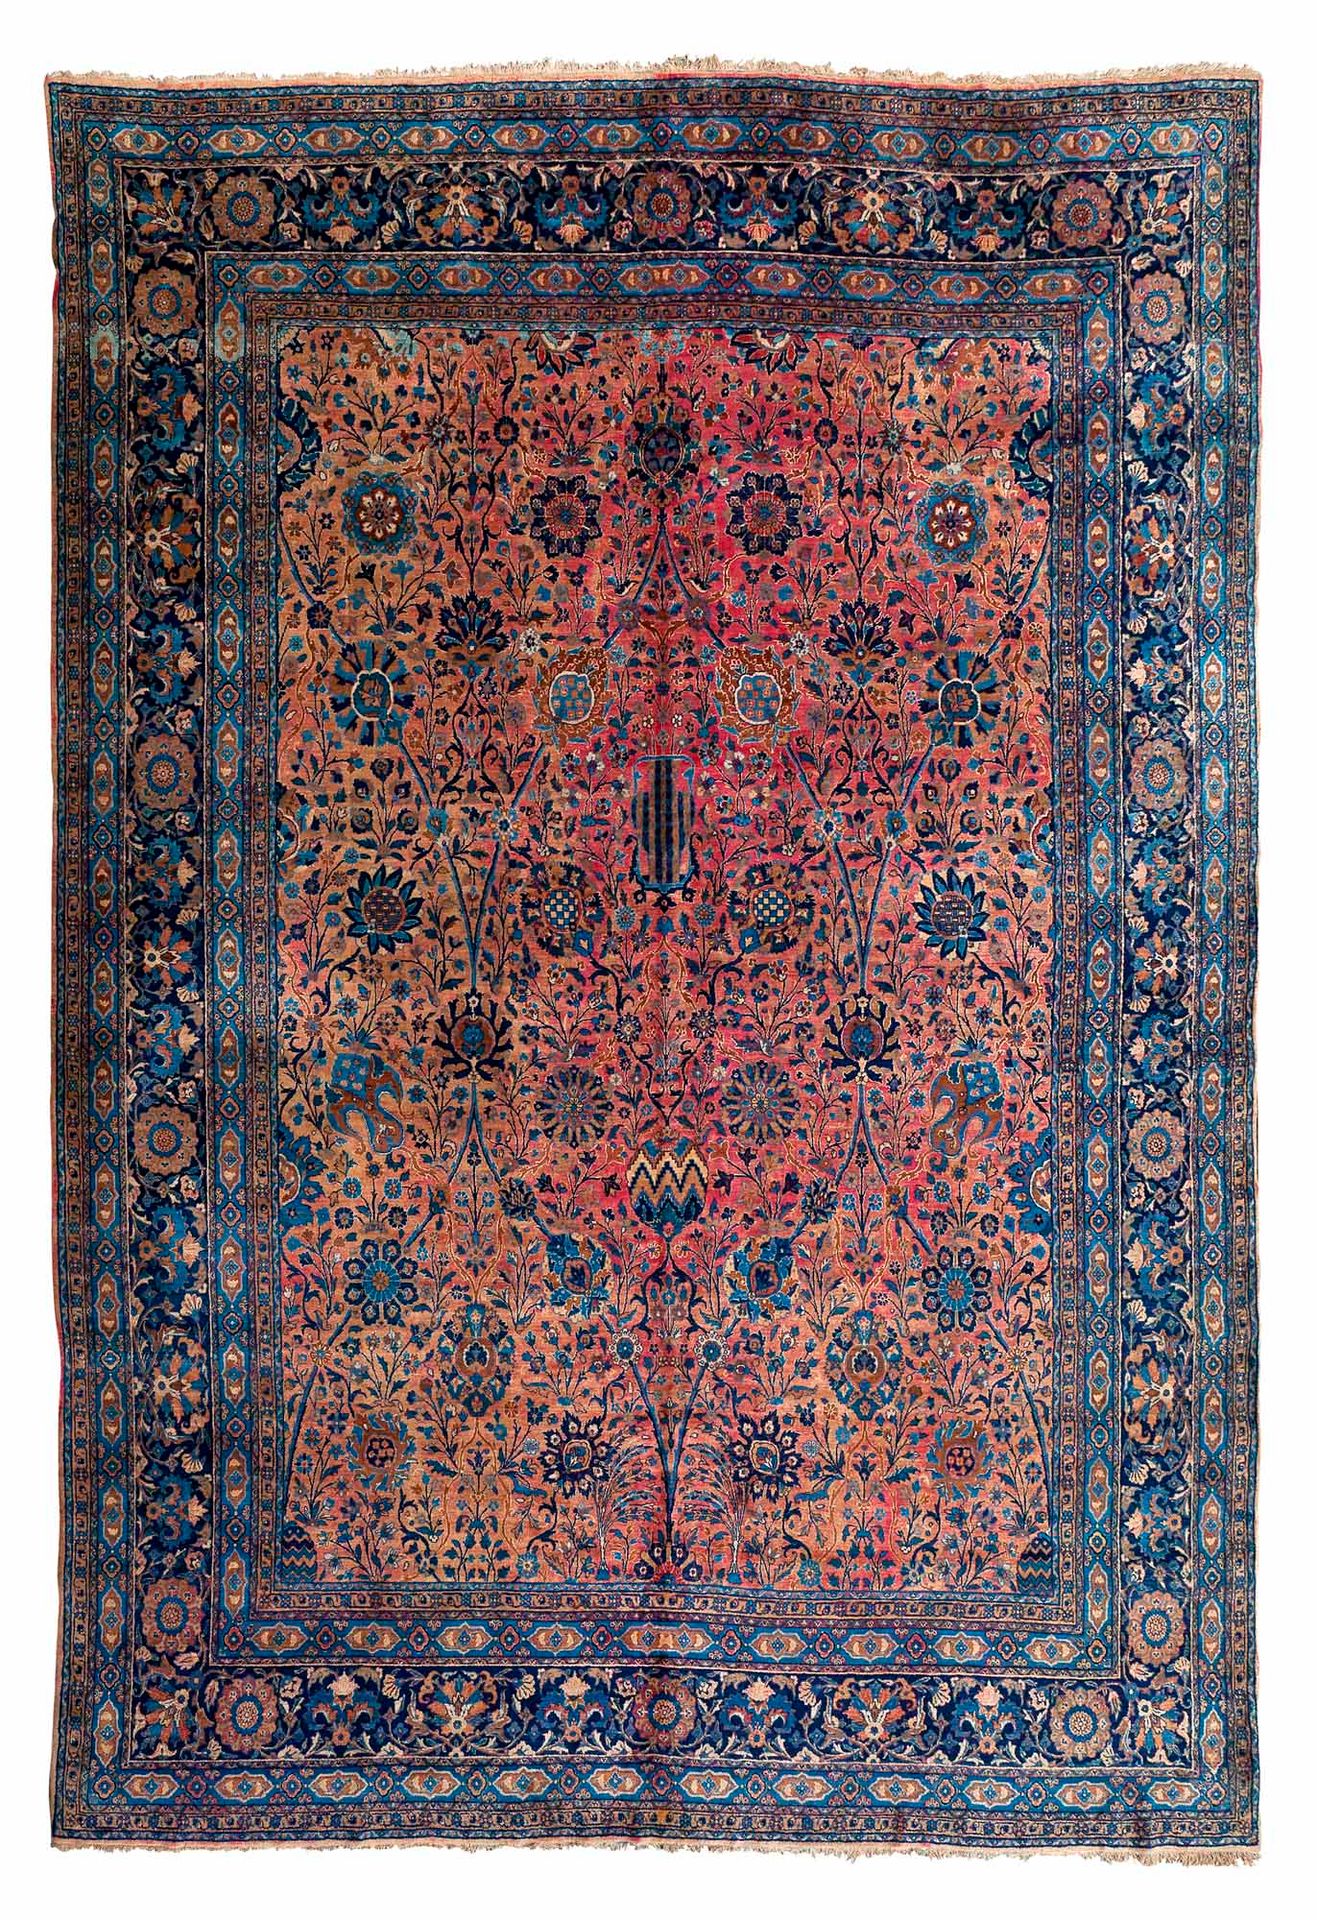 Null 重要的基尔曼地毯（波斯），20世纪前三分之一时期

尺寸：430 x 330厘米。

技术特点 : 羊毛天鹅绒，棉质底板。

鲑鱼背景上装饰着花枝、叶&hellip;